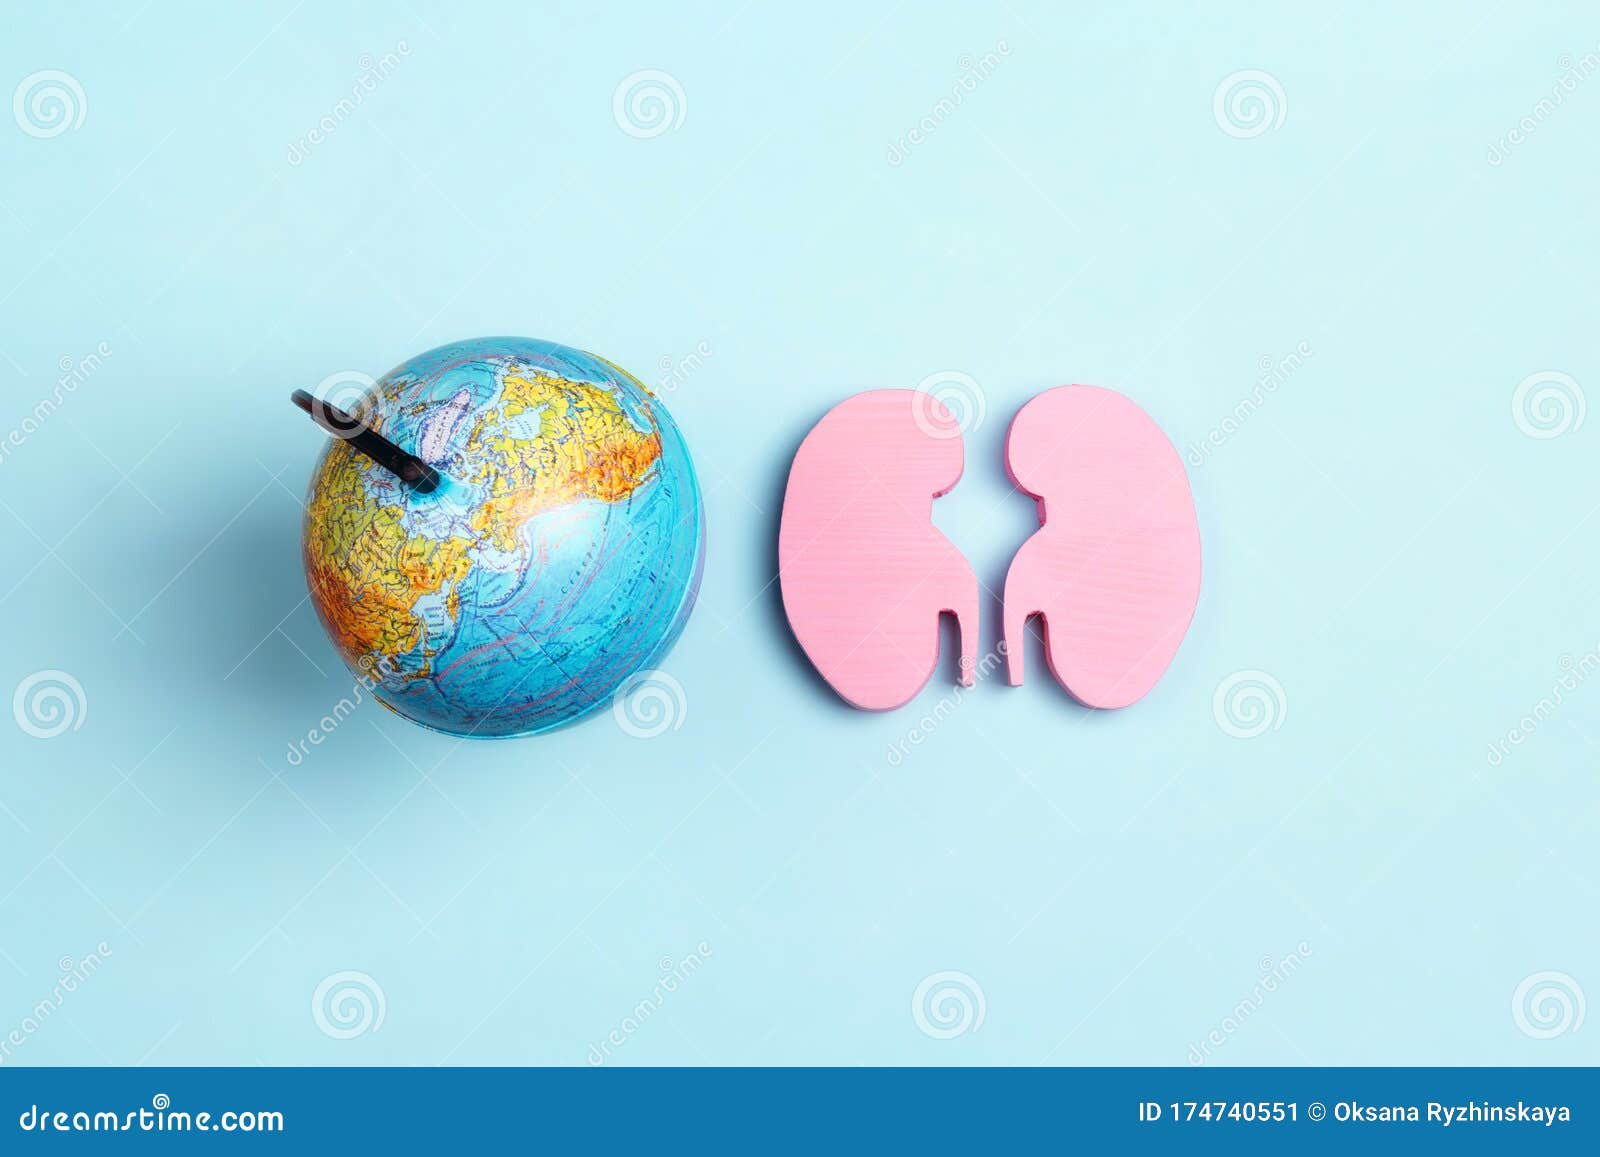 Human Kidney Symbol with Globe on Blue Background. World Kidney Day ...